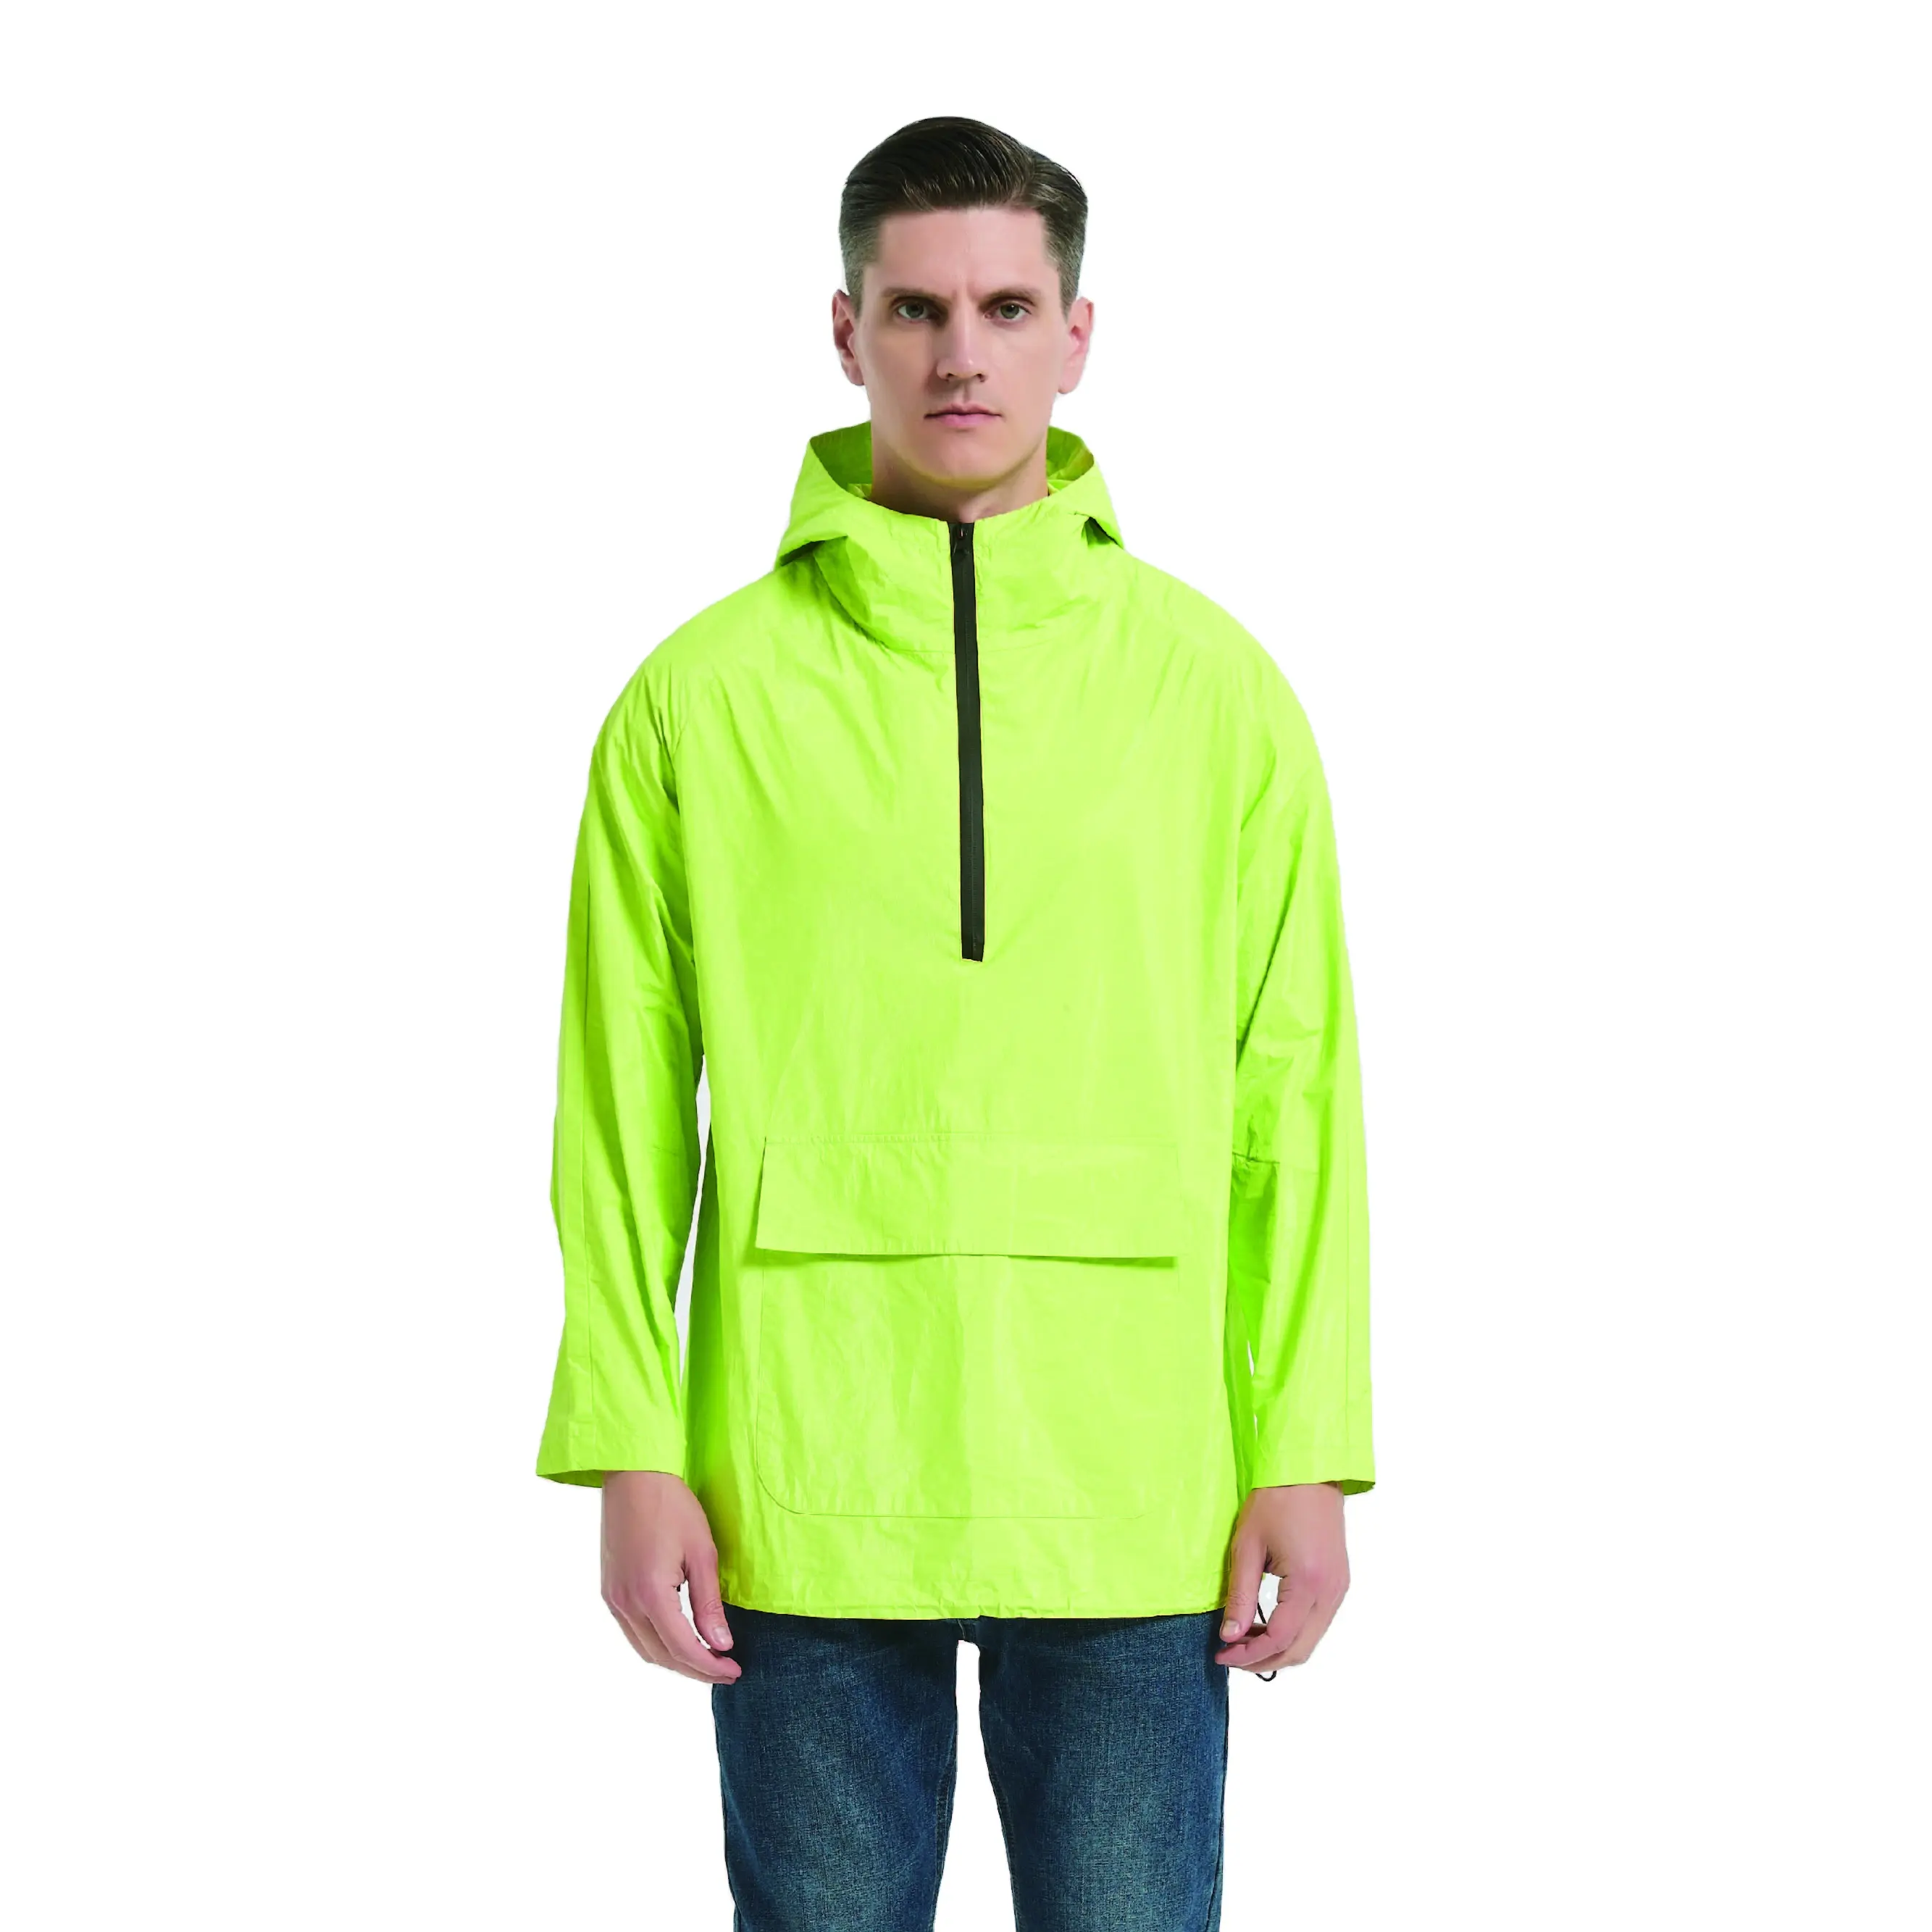 FIRST FIBER Dupont Tyvek Fluorescent Yellow Windbreaker Waterproof Rain Jacket Hooded Cagoule Outdoor Activities Safety Clothing